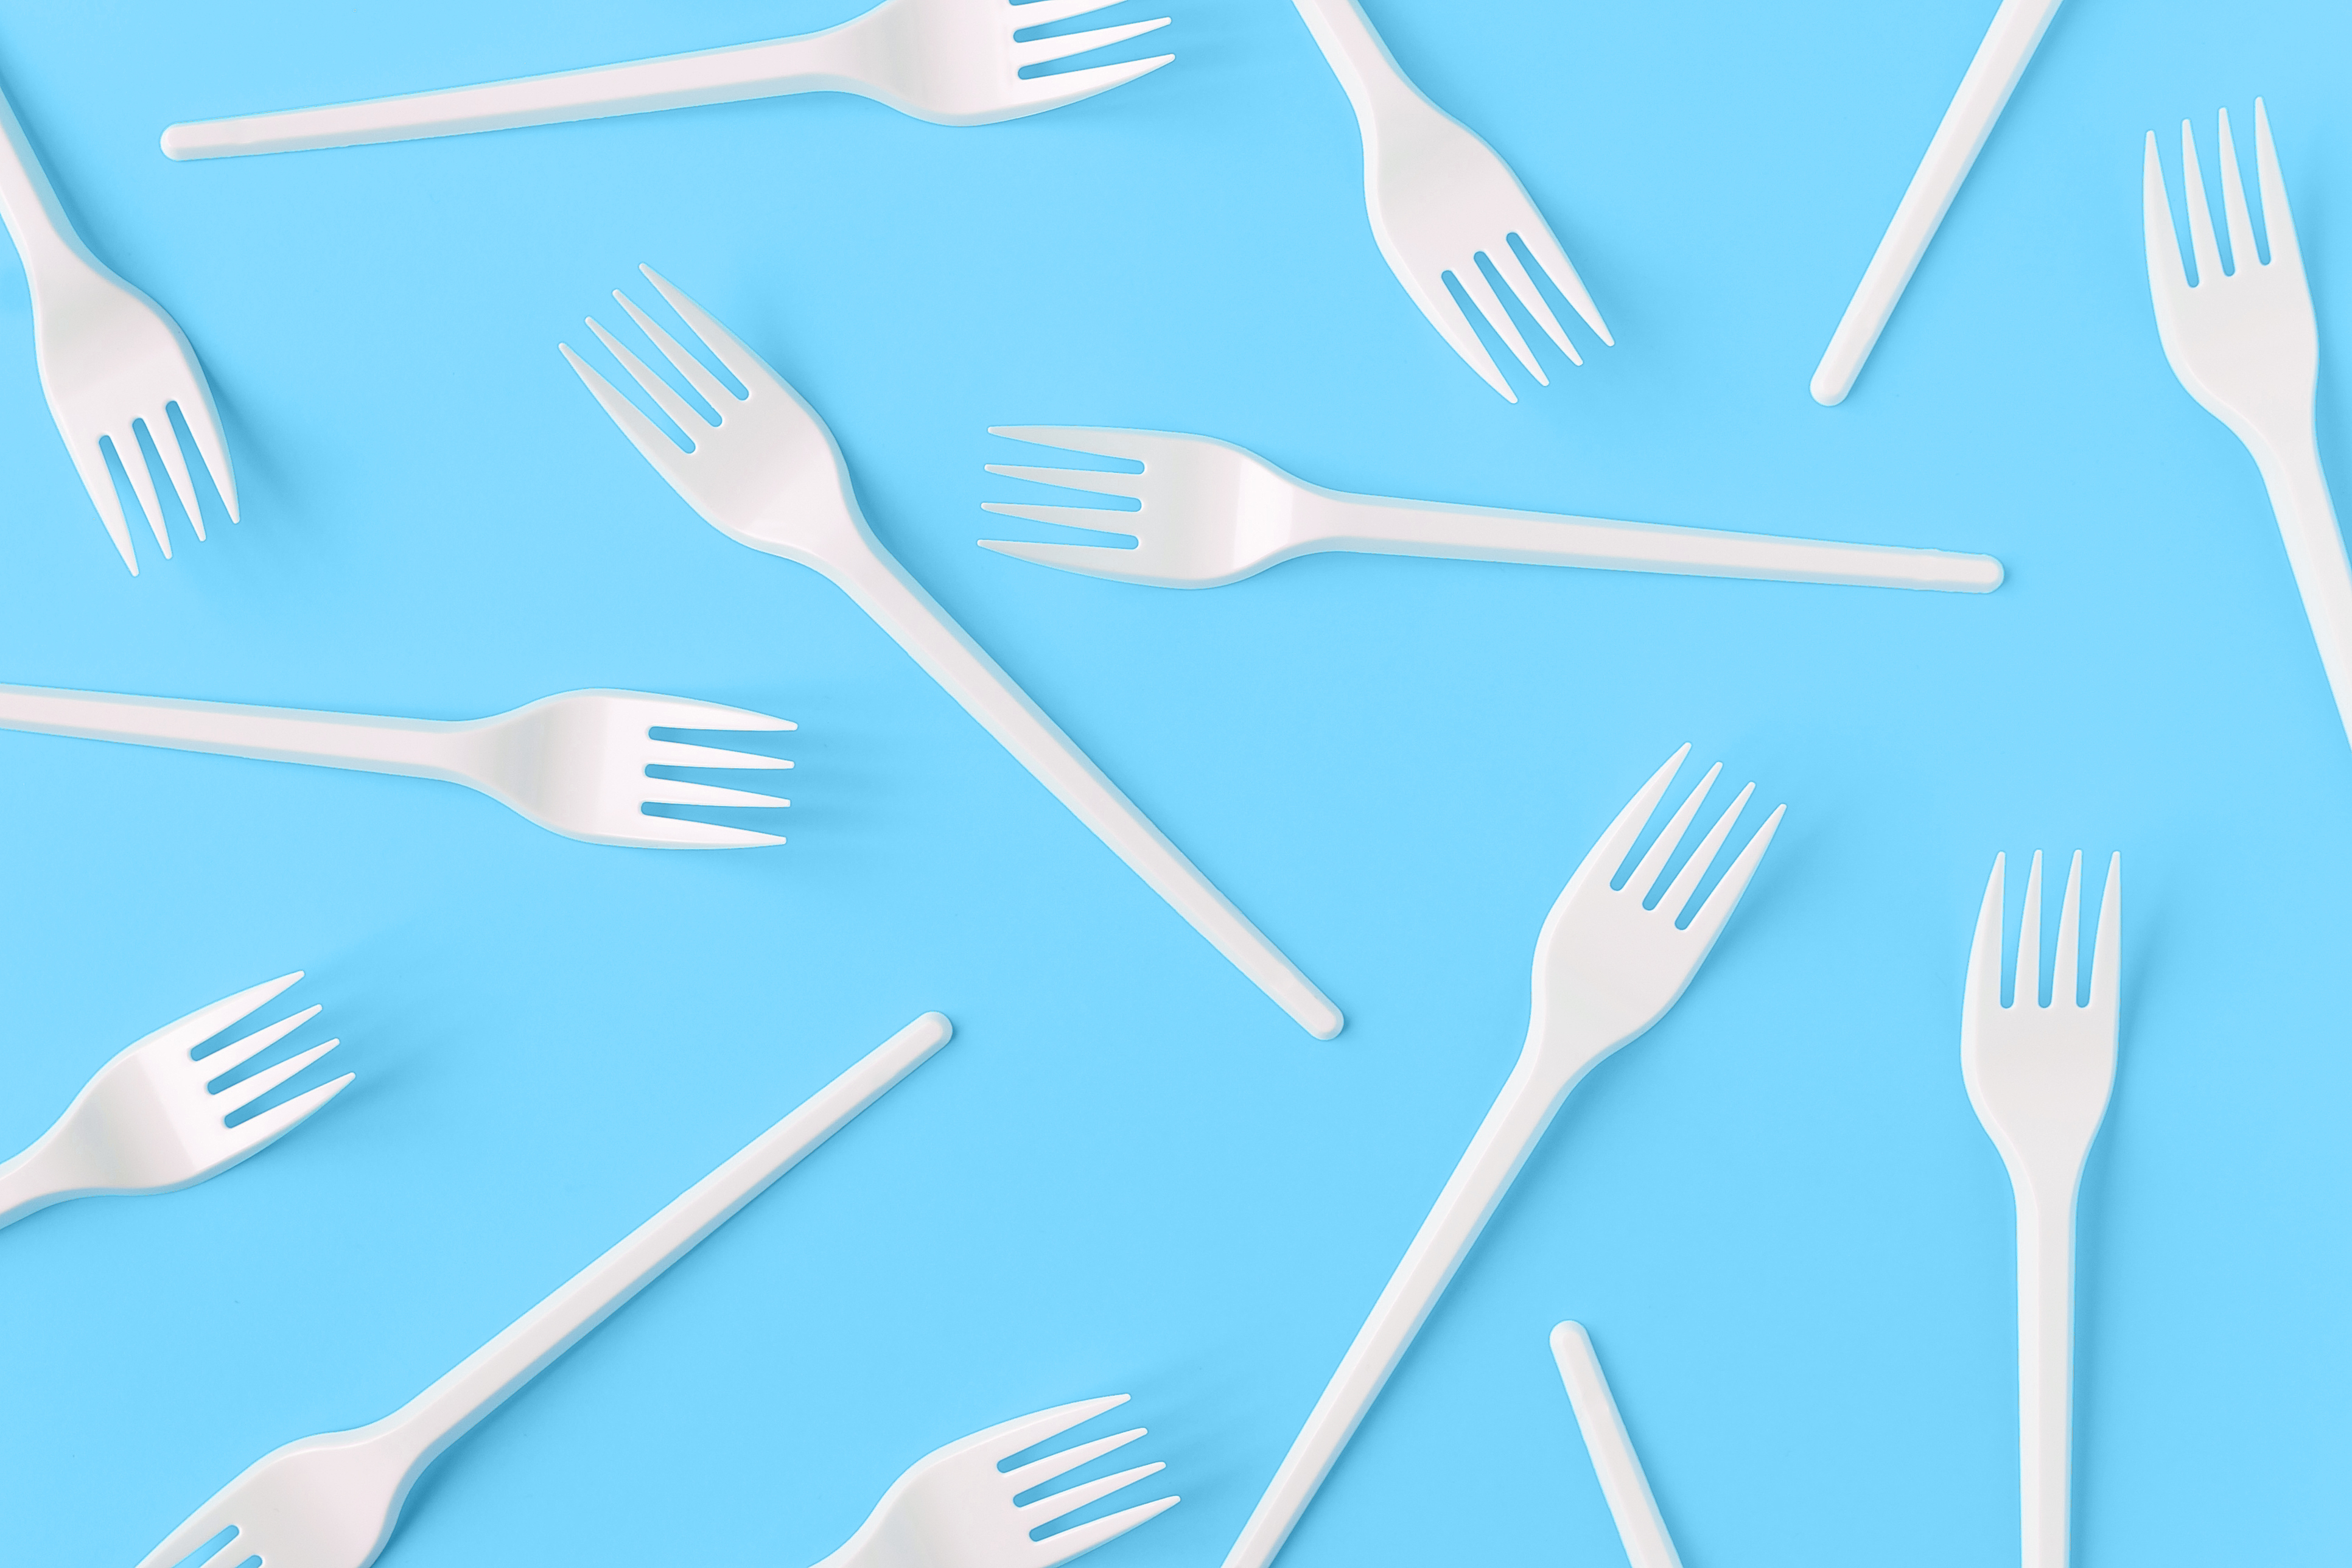 Single-use plastic forks on a blue background